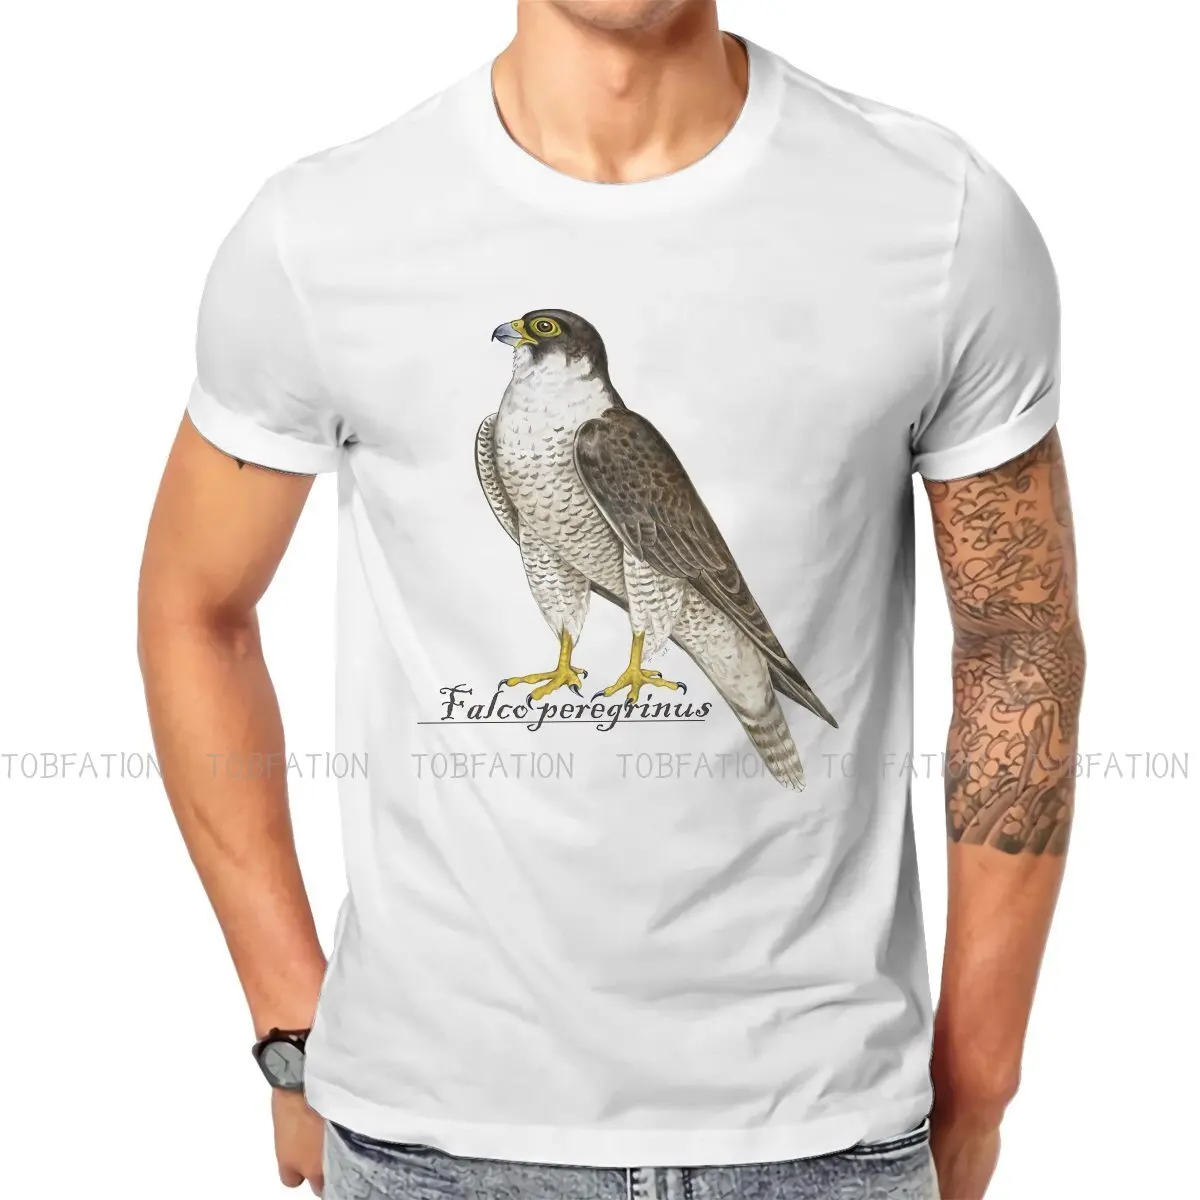 

Falconry Austringer Hawk Crewneck TShirts Peregrine Falcon Distinctive Homme T Shirt Funny Tops Size S-6XL